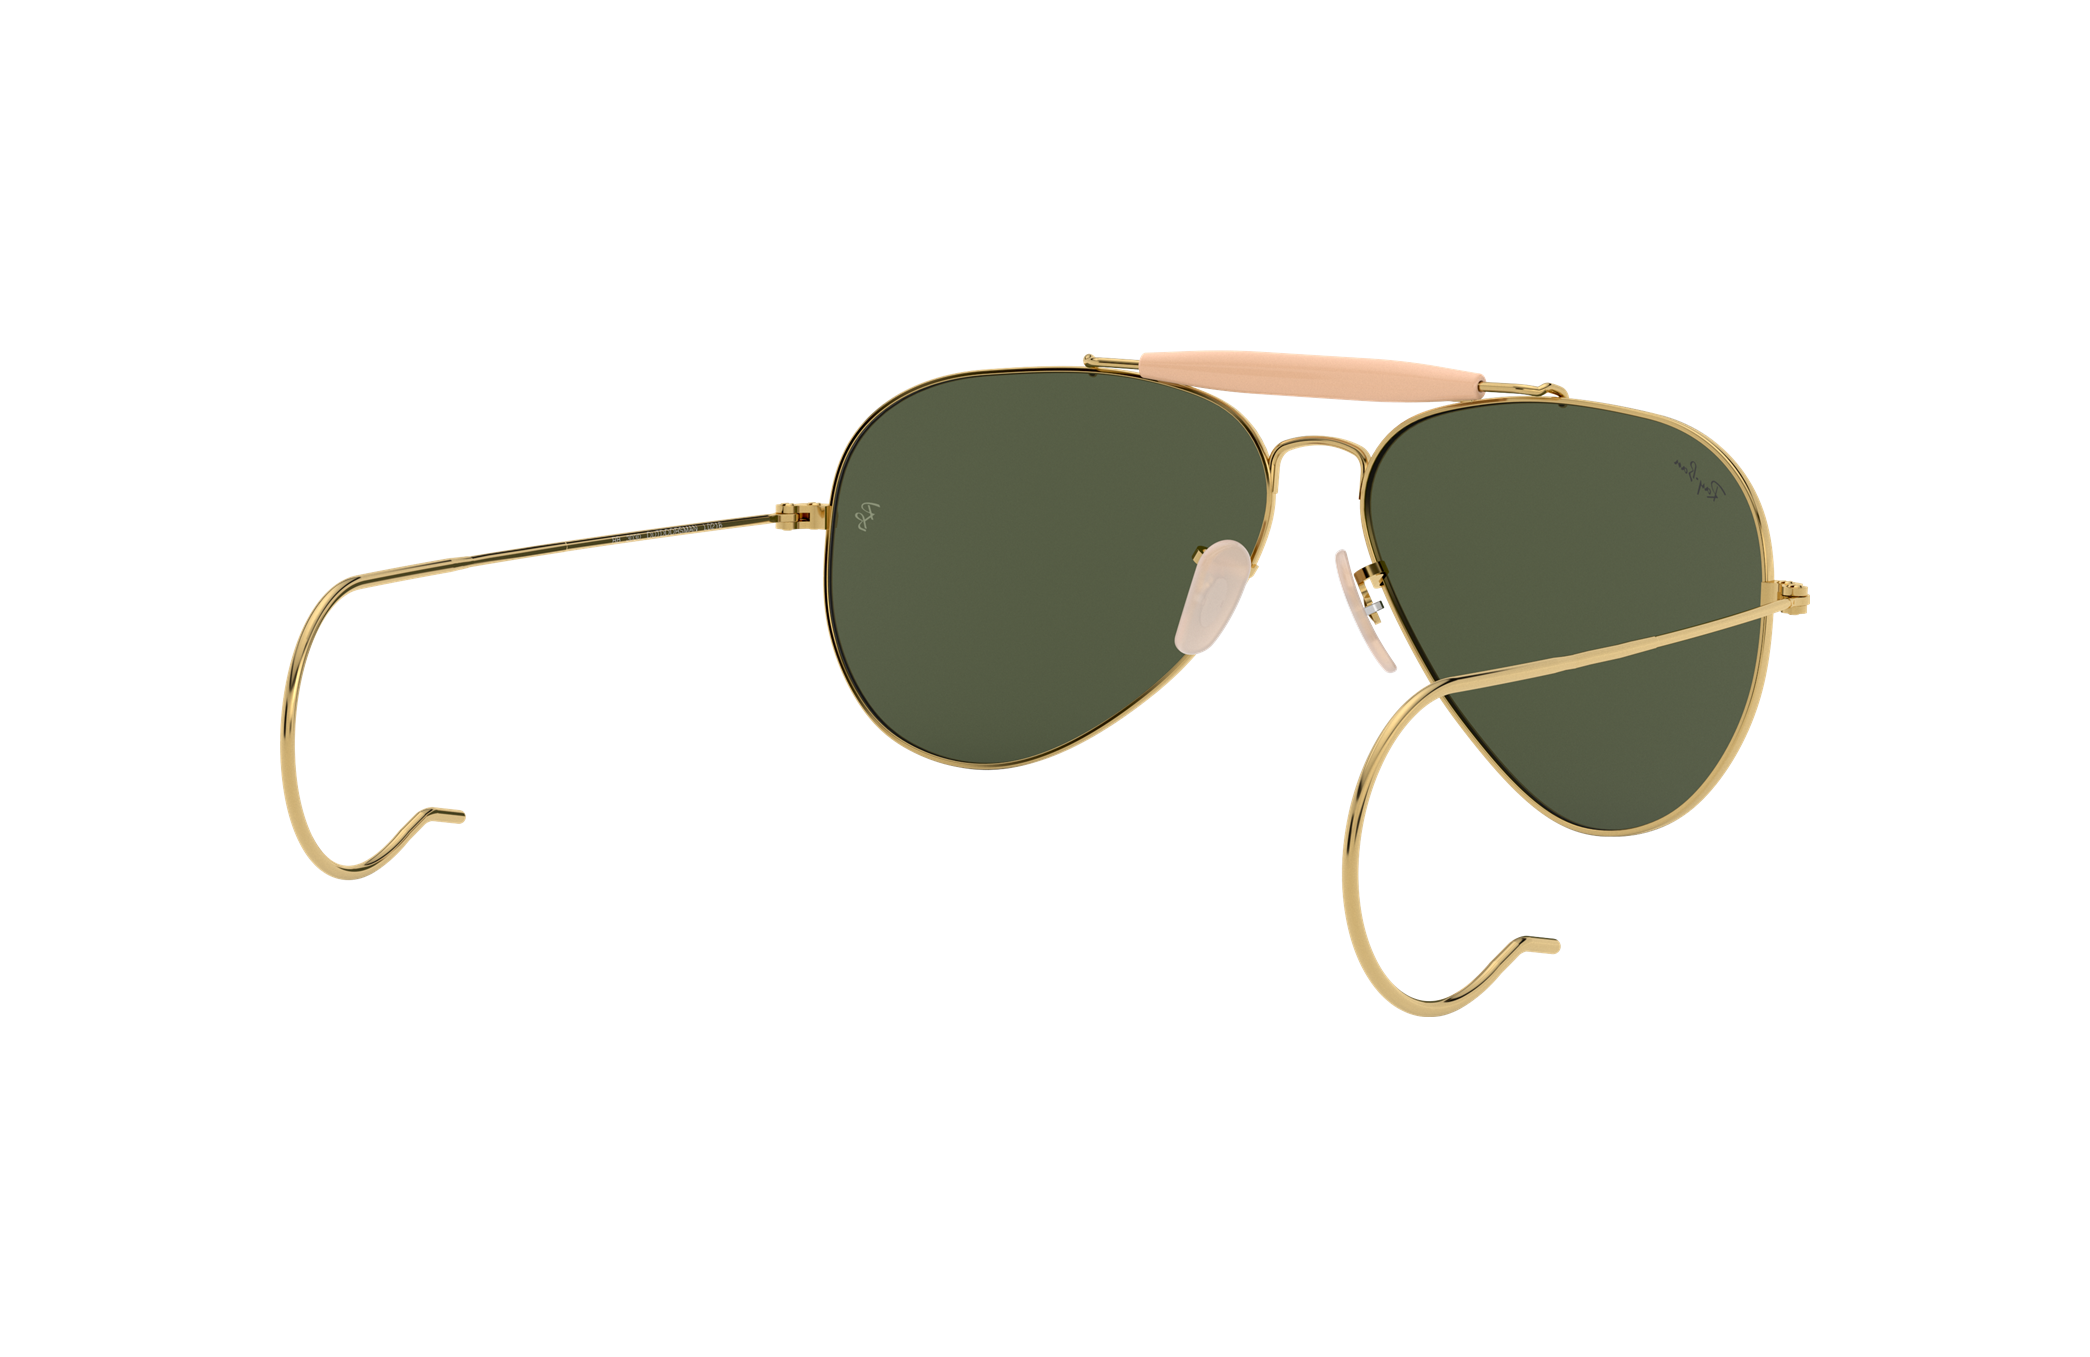 Ray-Ban Classic Aviator Sunglasses, Gold/Green | Natasha oakley, Ray bans, Rayban  sunglasses aviators